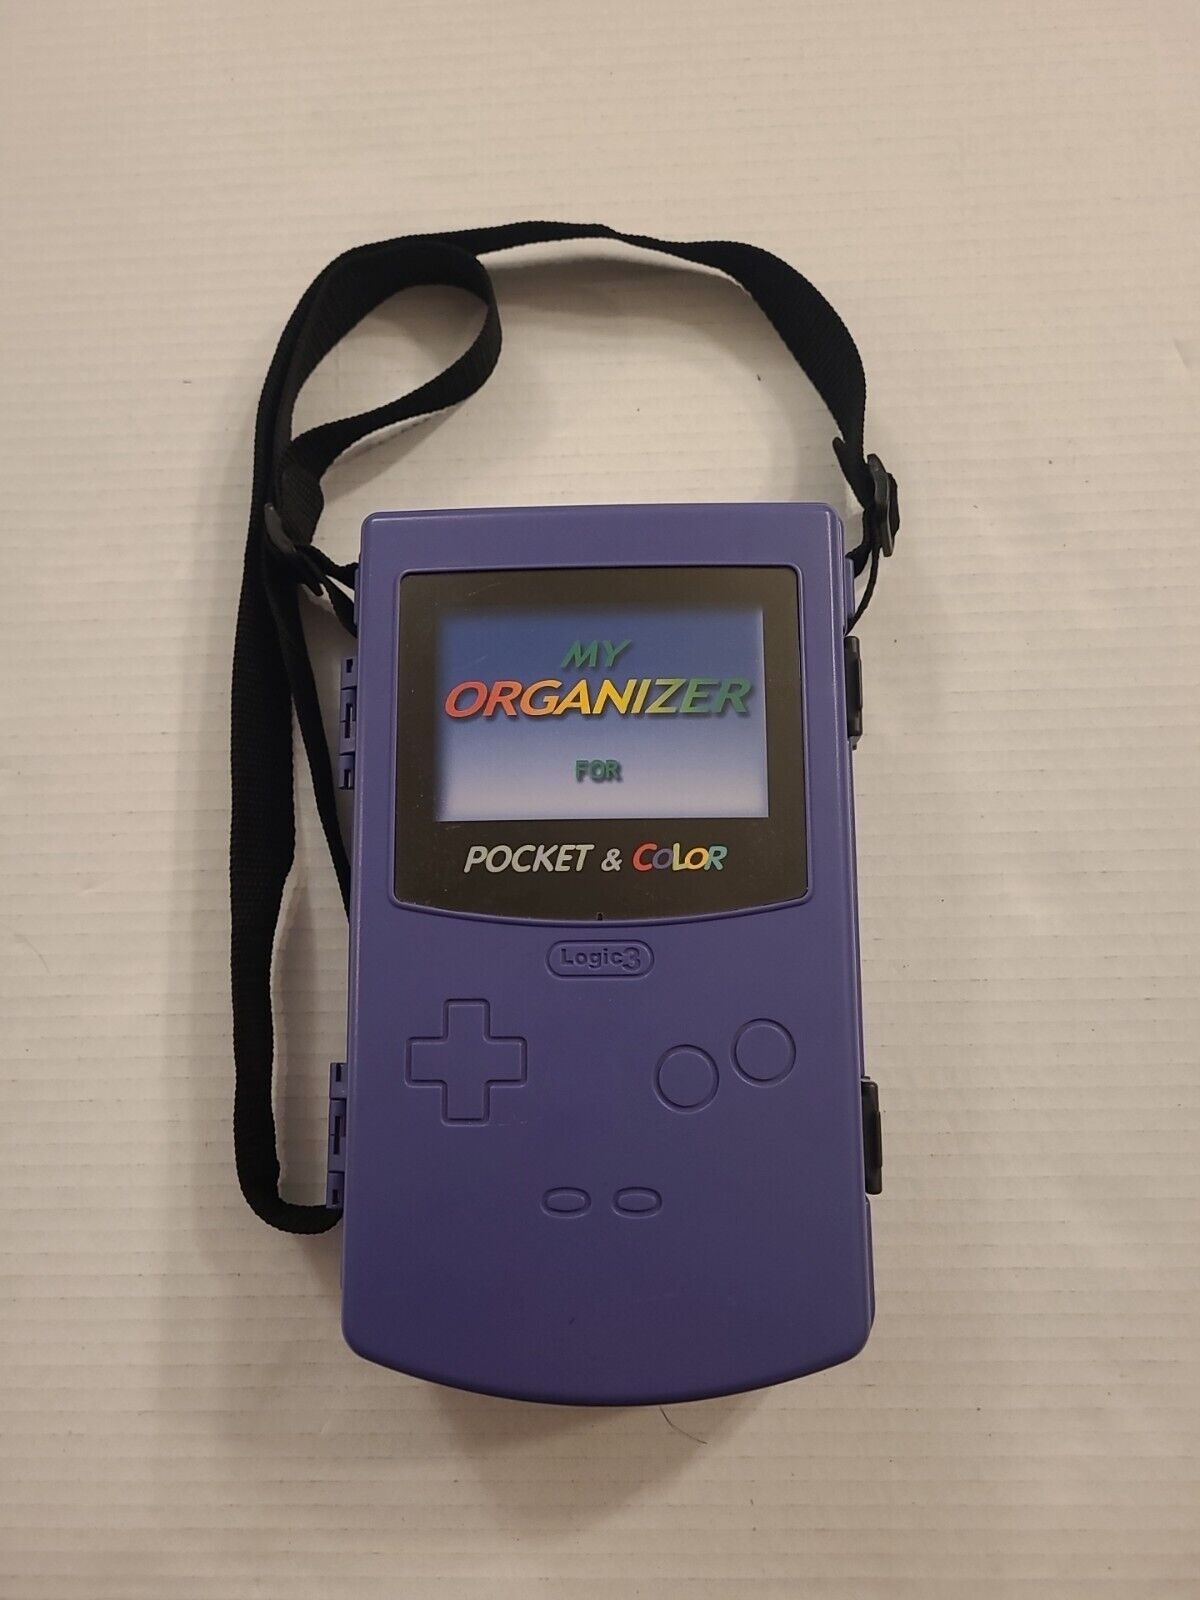 Logic 3 My Organizer For Pocket & Color Nintendo Gameboy Hard Travel Case Purple